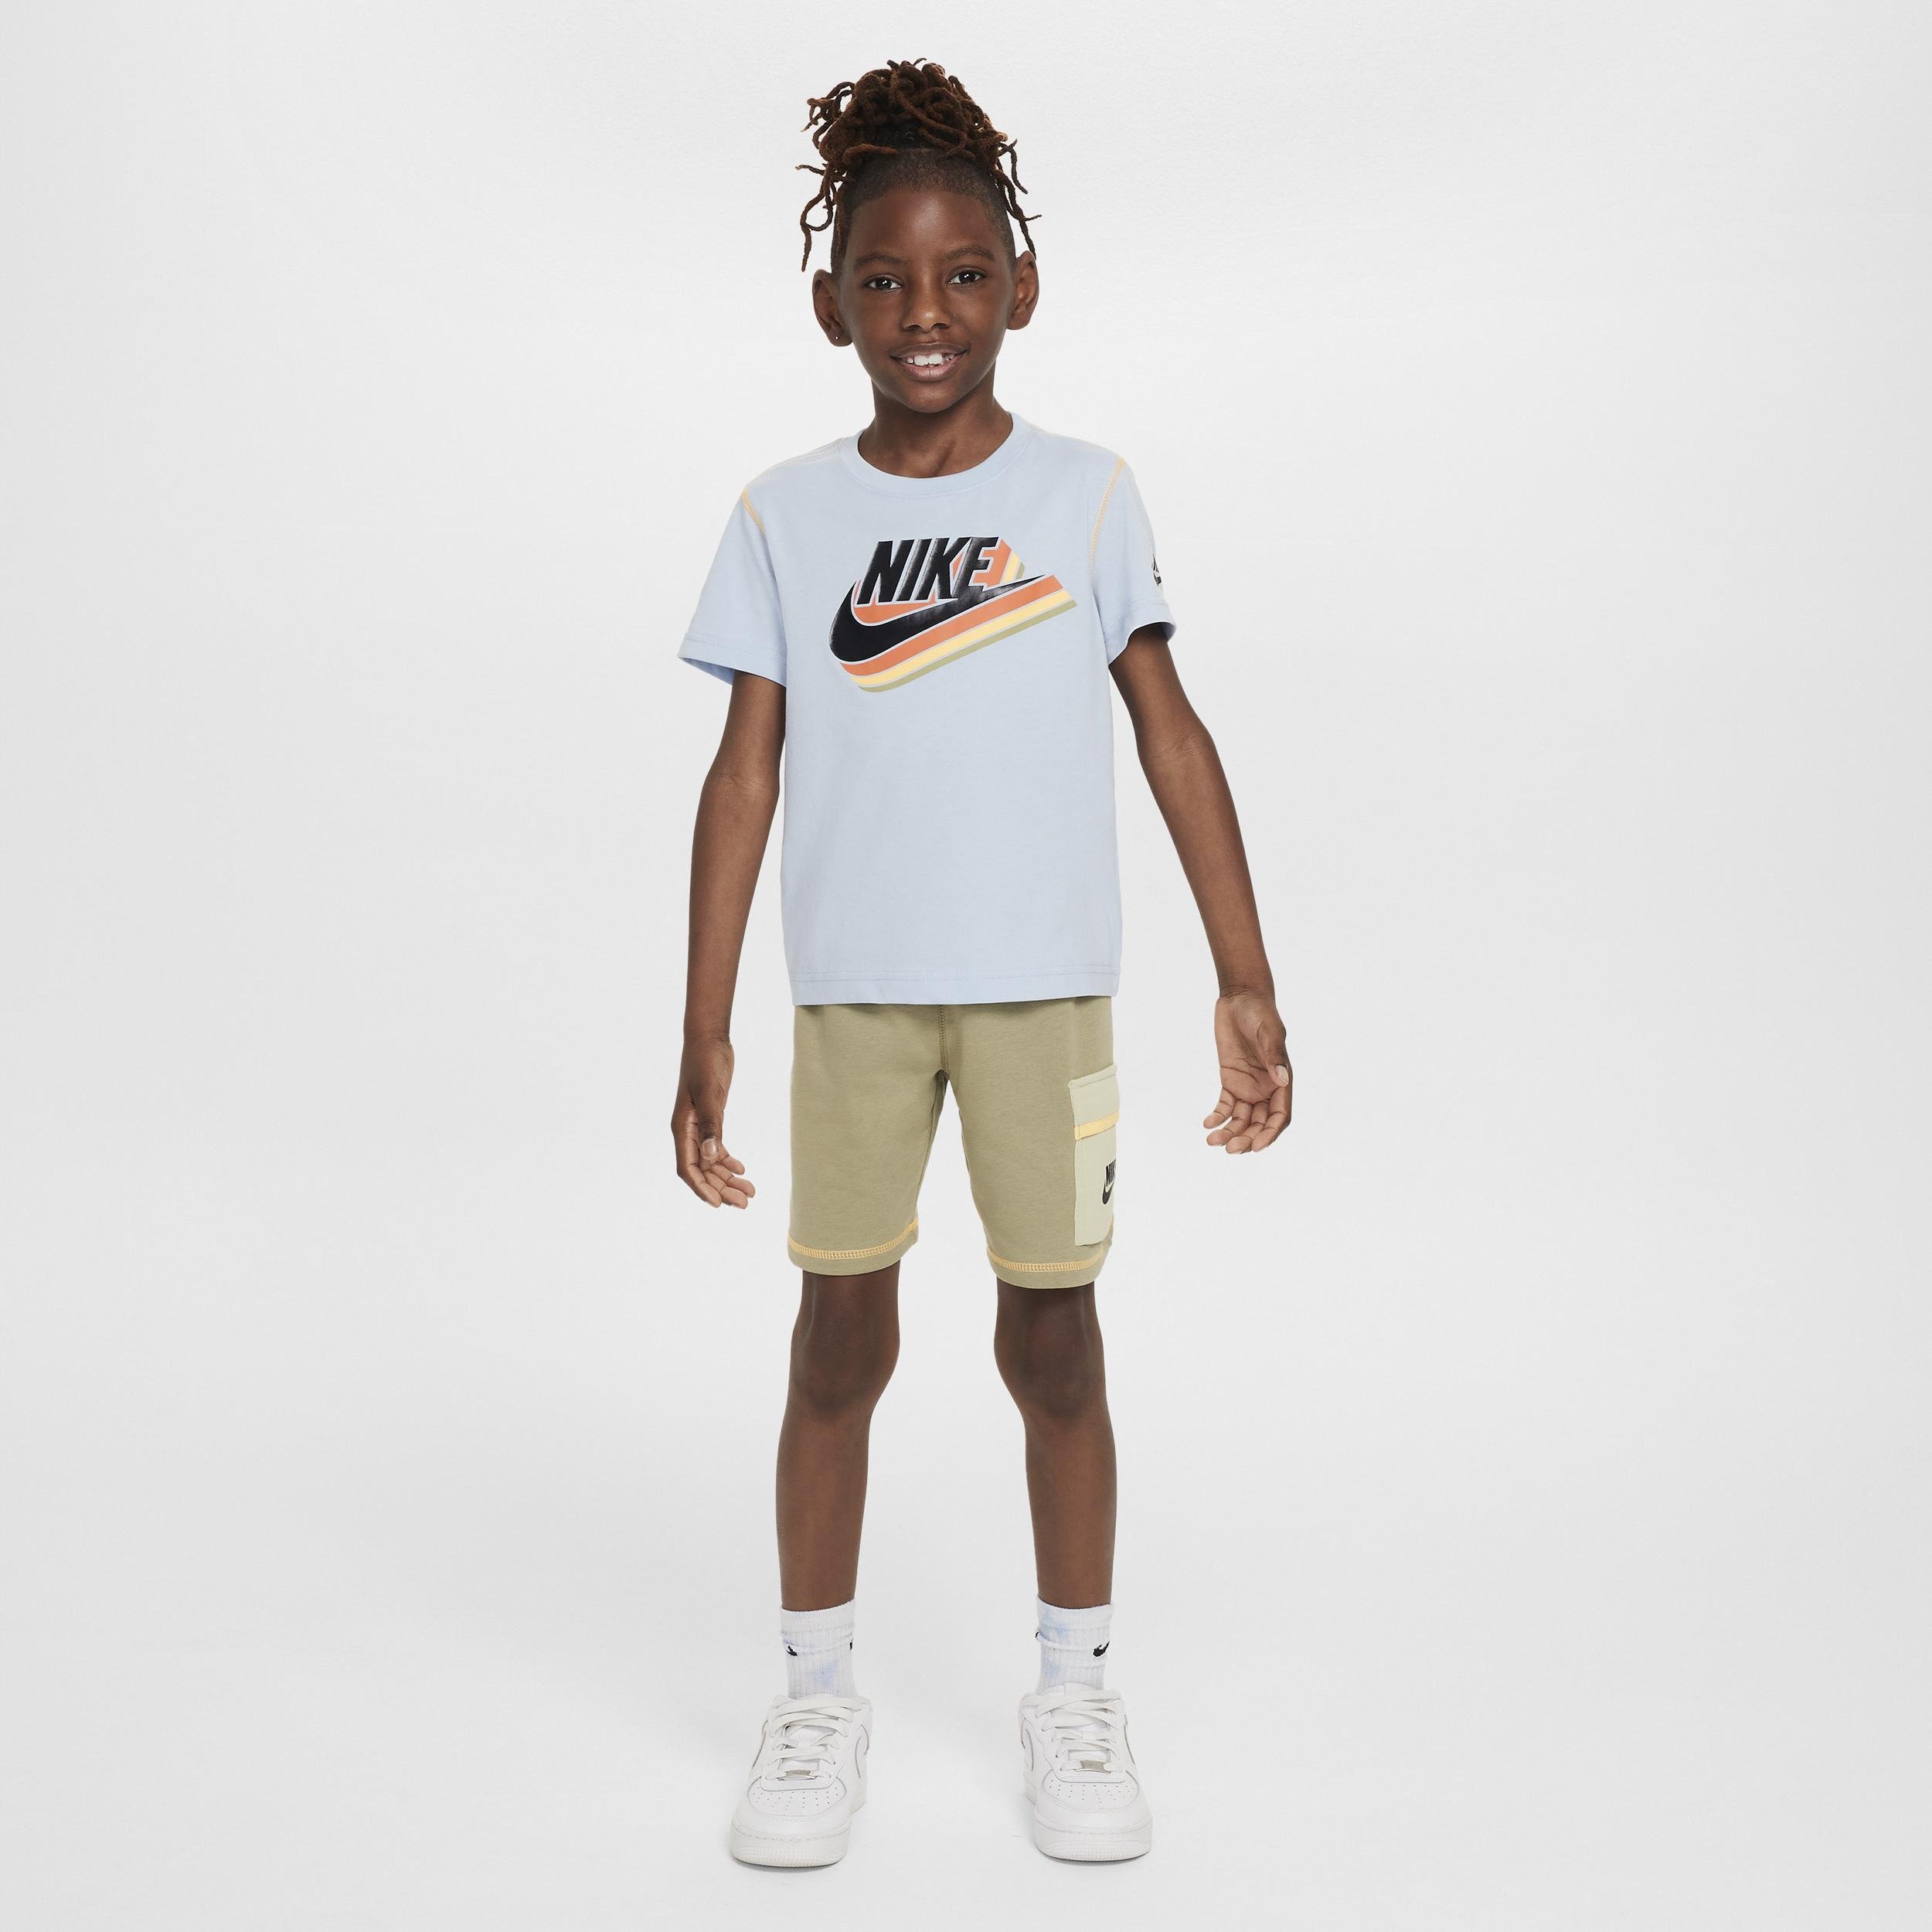 Nike Sportswear Reimagine Little Kids' French Terry Shorts Set by NIKE